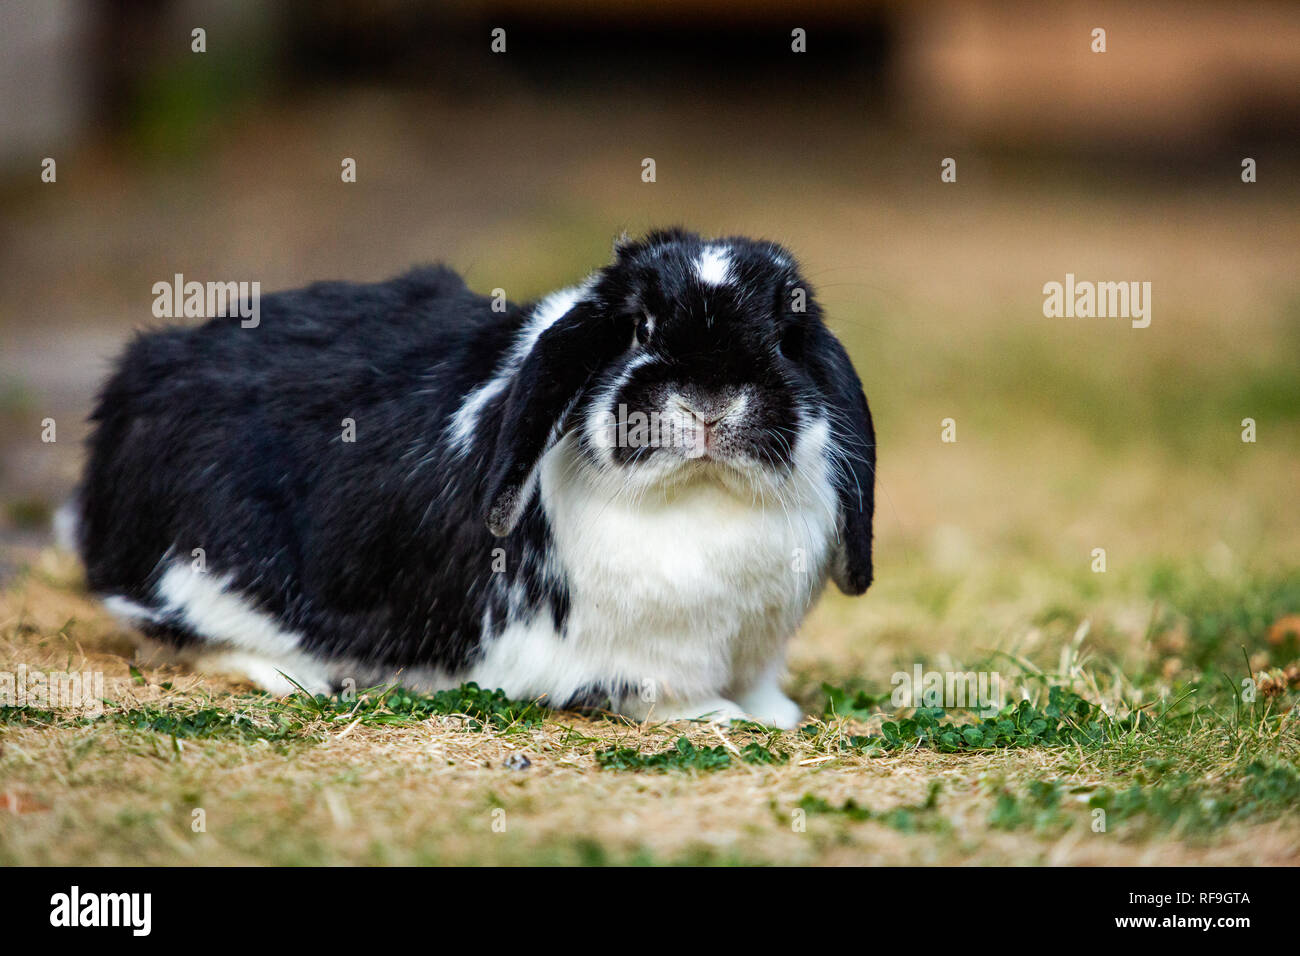 Lion head rabbit / mini lop rabbit Stock Photo